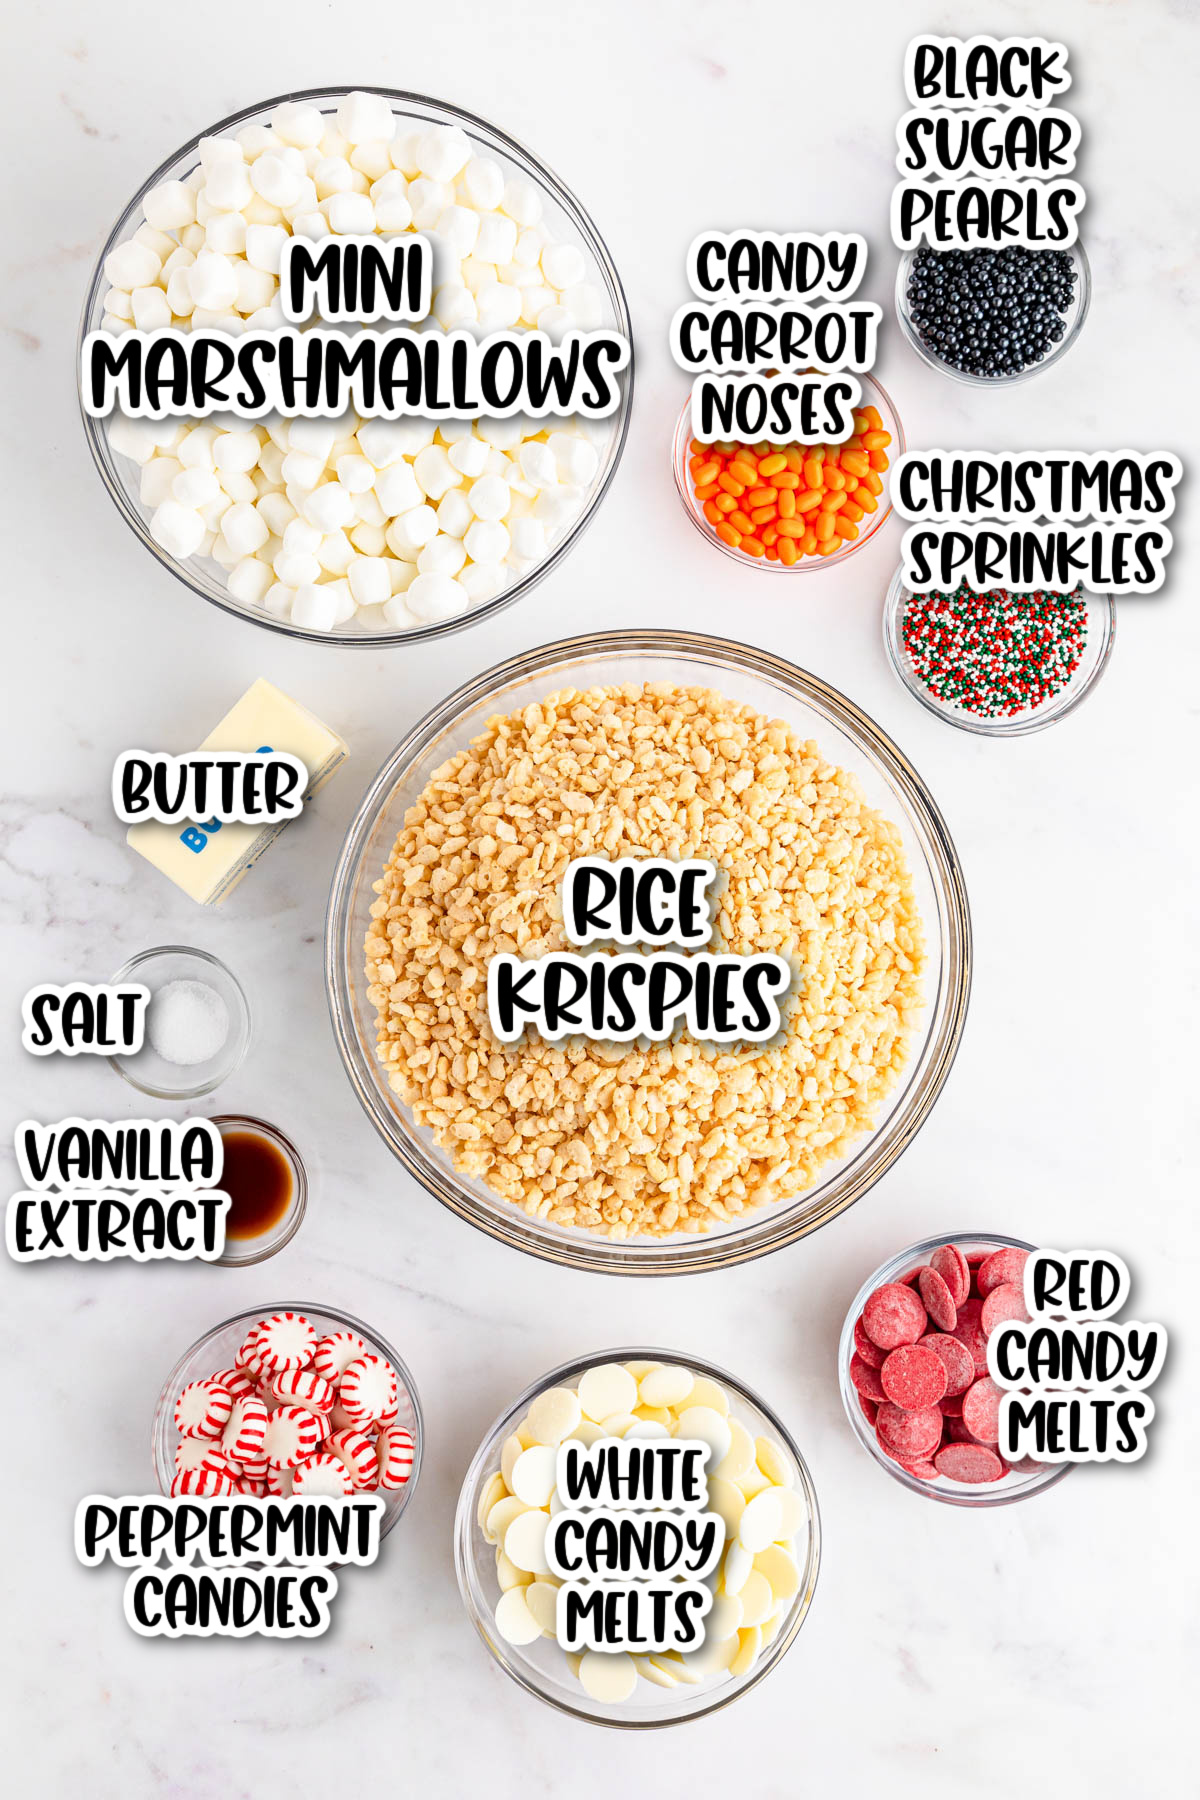 The ingredients for Snowman rice krispie treats